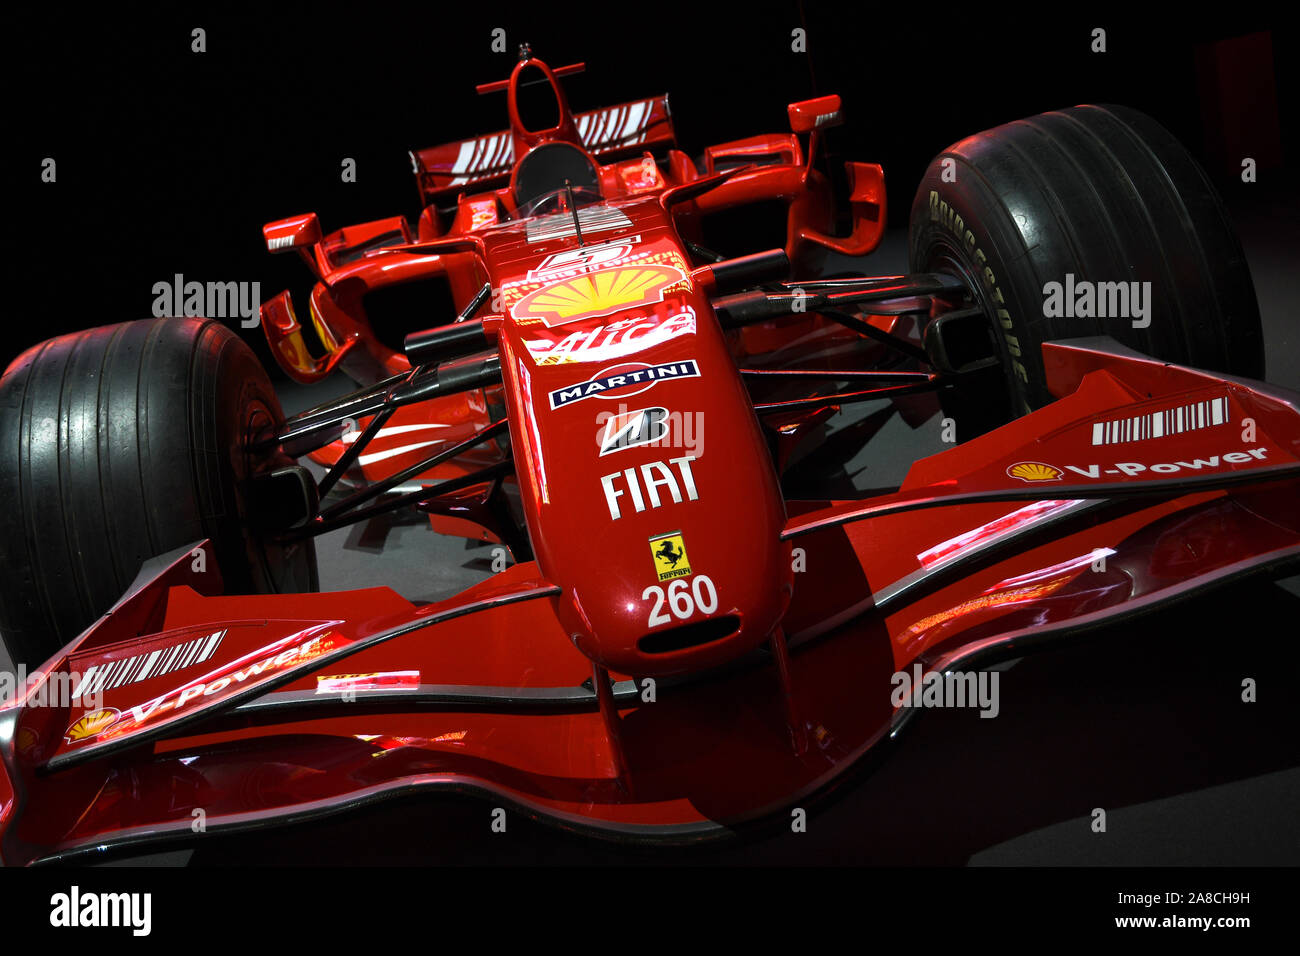 Mugello, 25. Oktober 2019: Ferrari F1 Modell F 2007 Jahr 2007 ex-Weltmeister Kimi Räikkönen auf dem Display während Finali Mondiali Ferrari 2019. Stockfoto